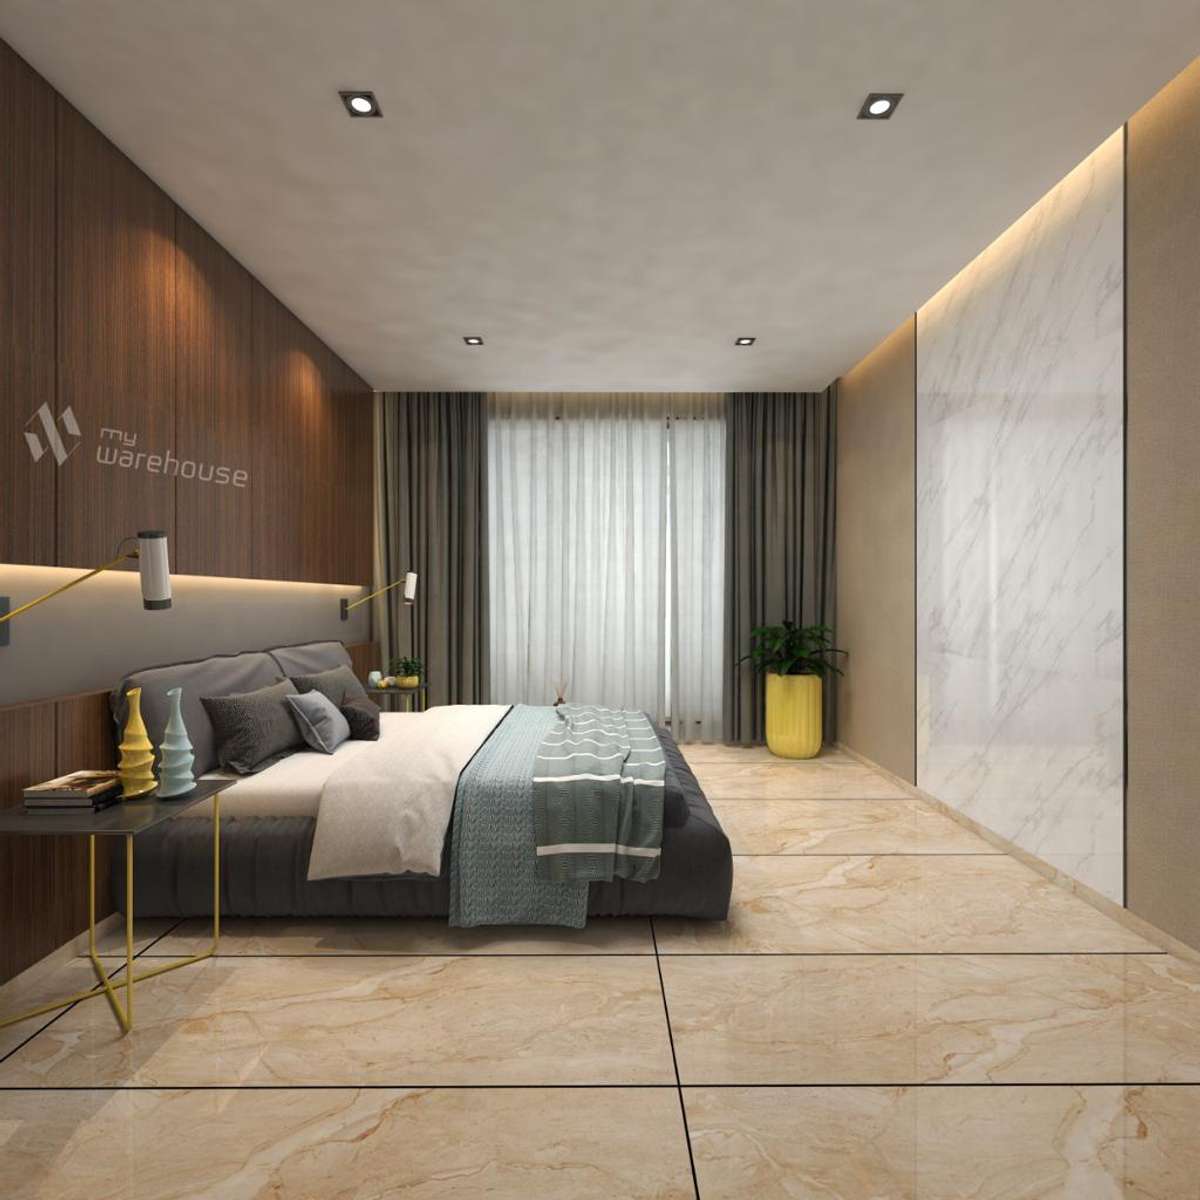 Bedroom view.

#tiles #tiledesign  #Renovation #walltile #tileaddiction #ceramictiles #porcelaintiles  #tilework #tilestyle #tileinstallation #shower #bathroomremodel #floor #decor #kitchendesign